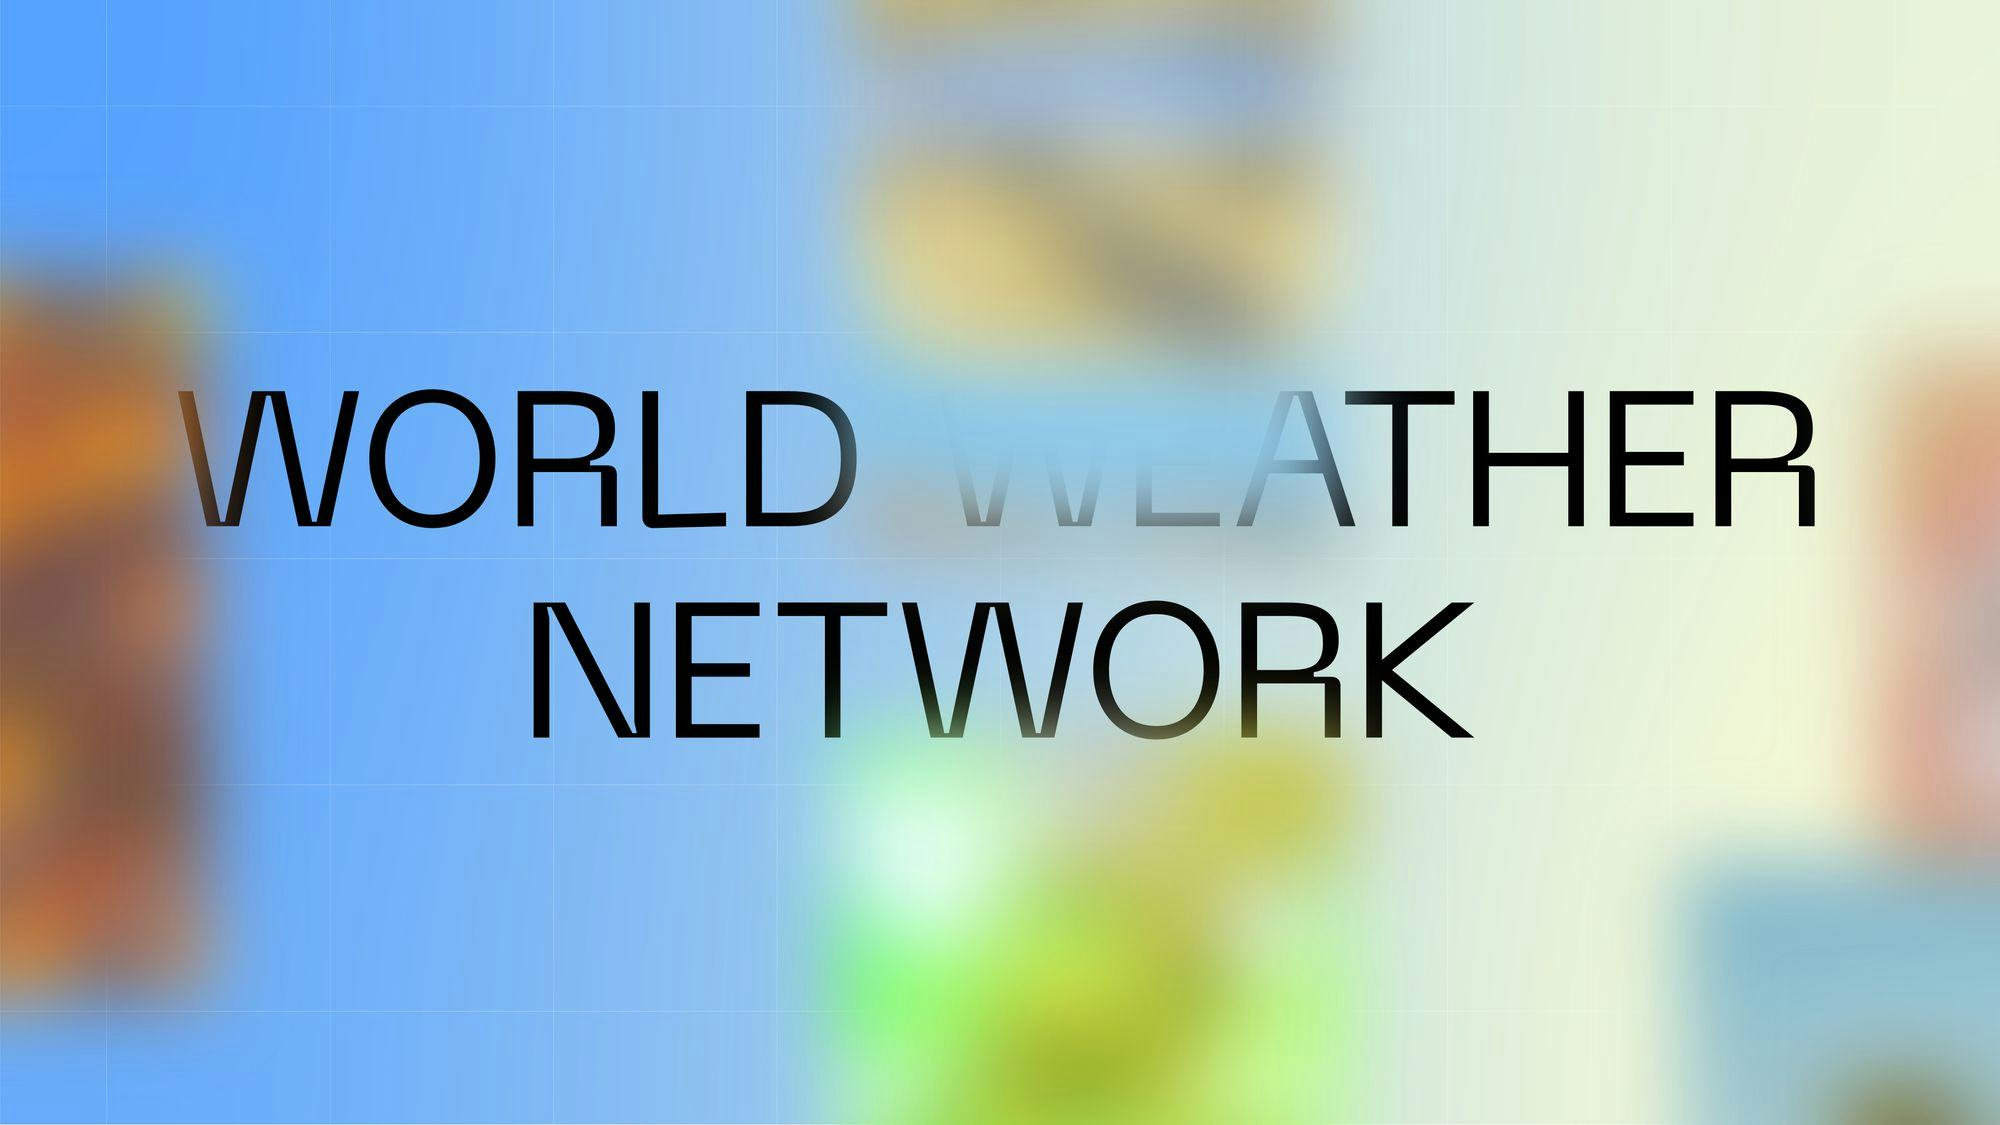 World Weather Network image